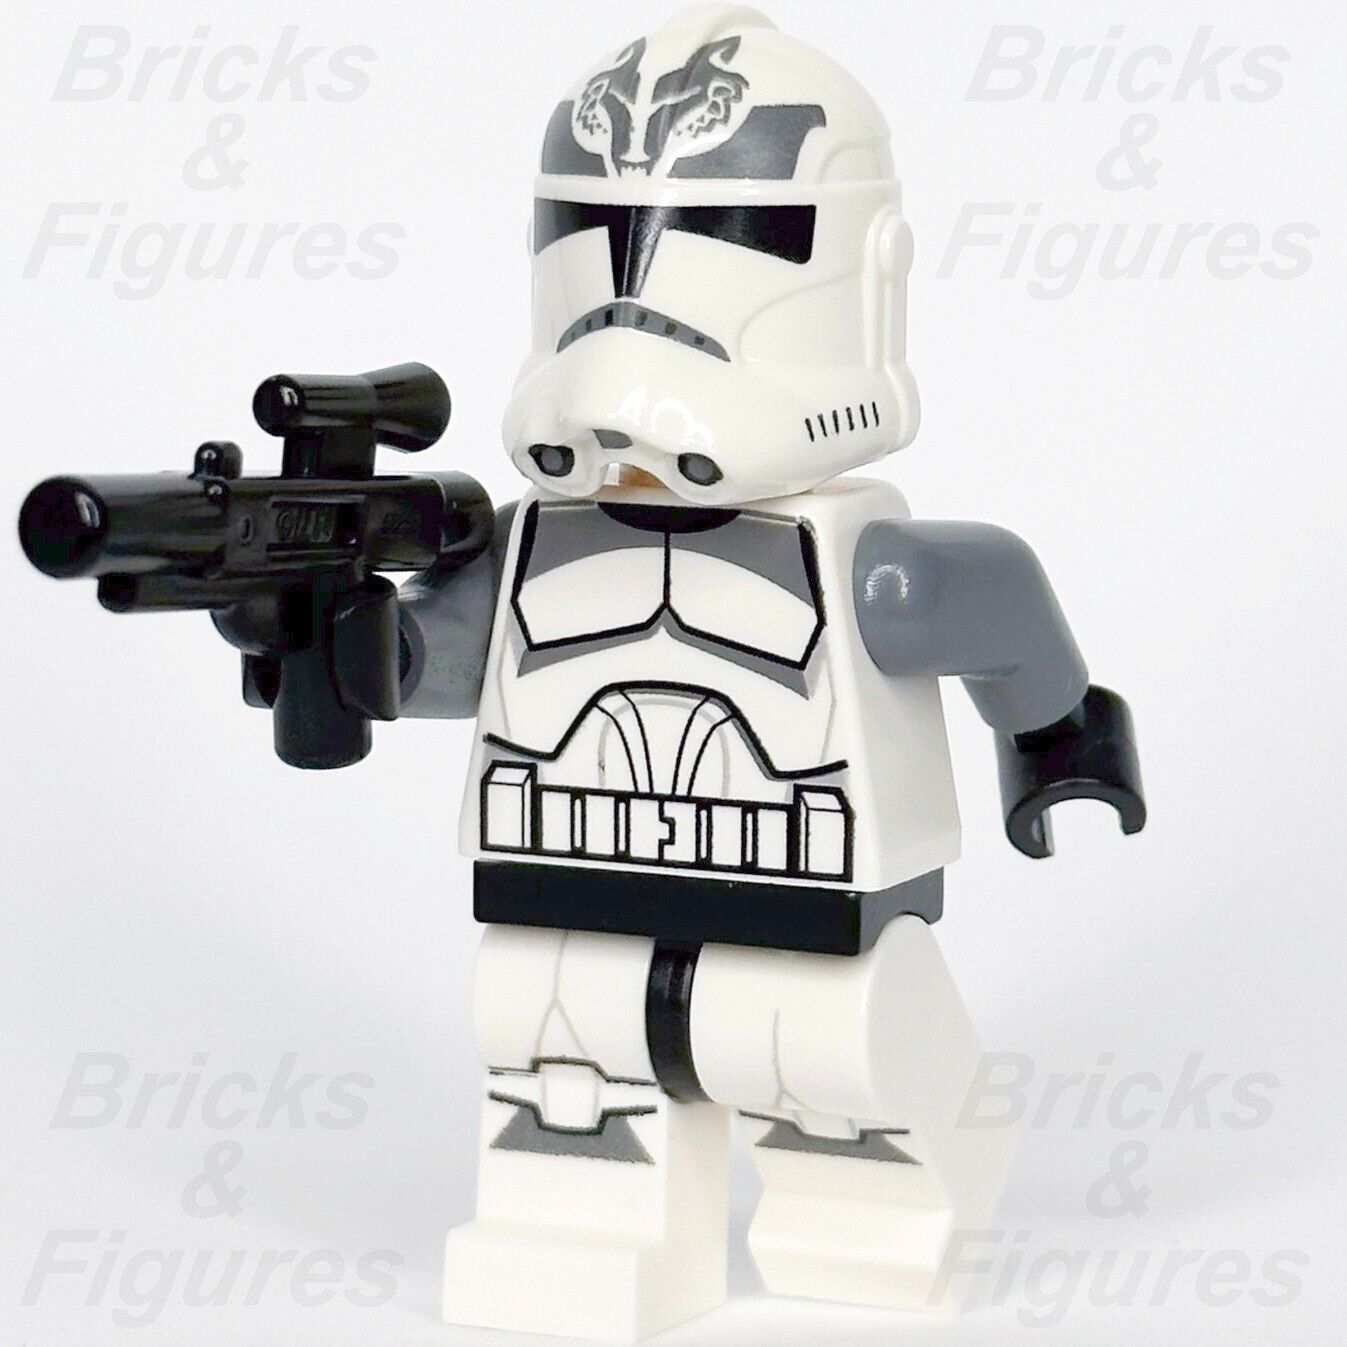 LEGO Star Wars Wolfpack Clone Trooper Minifigure 104th Phase 2 75045 sw0537 New - Bricks & Figures